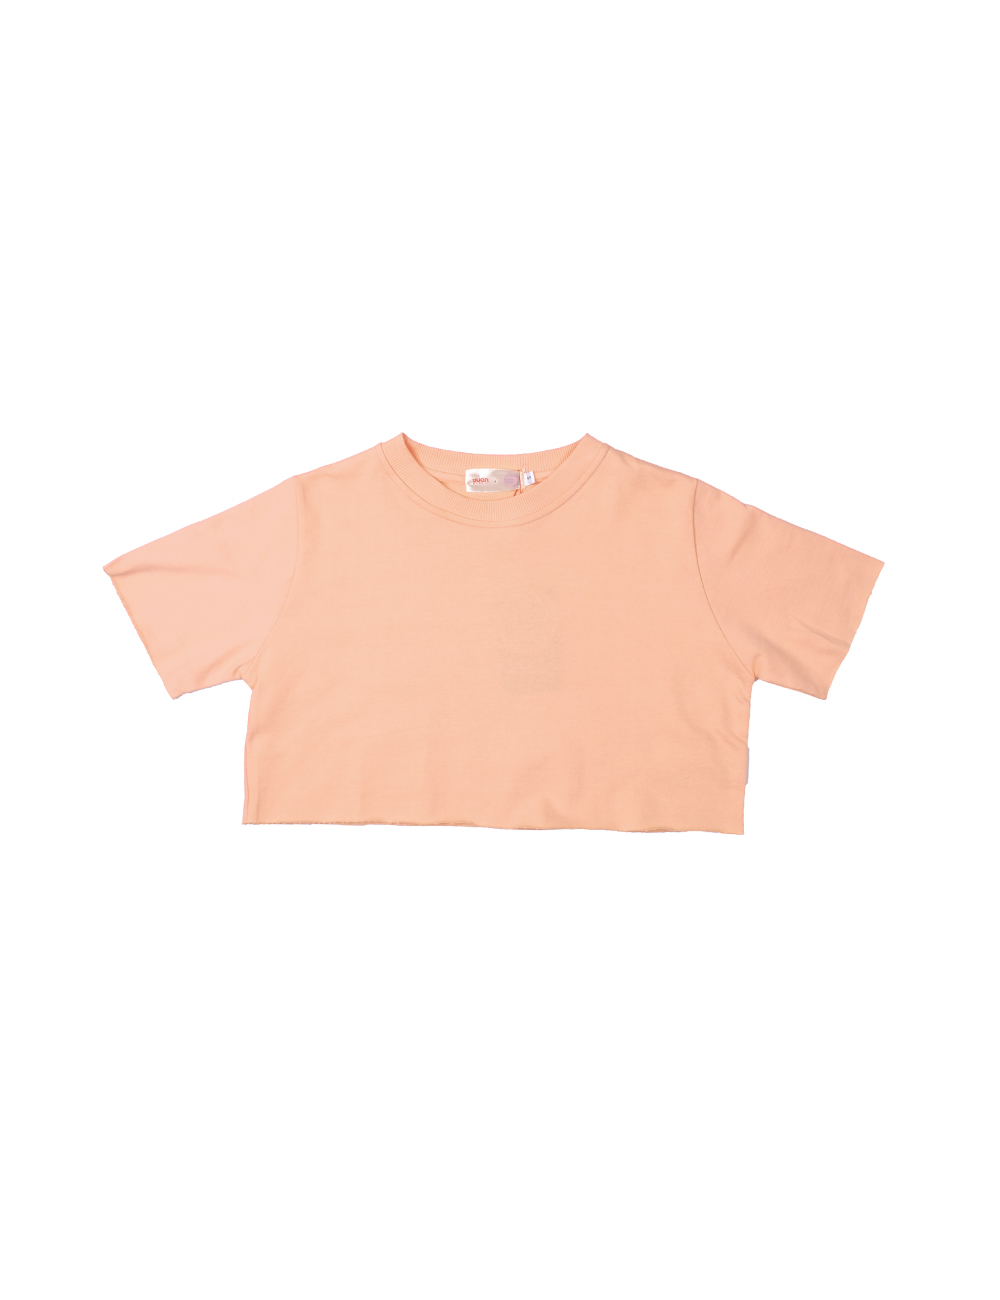 Yuan Market - June T - Shirt Peach